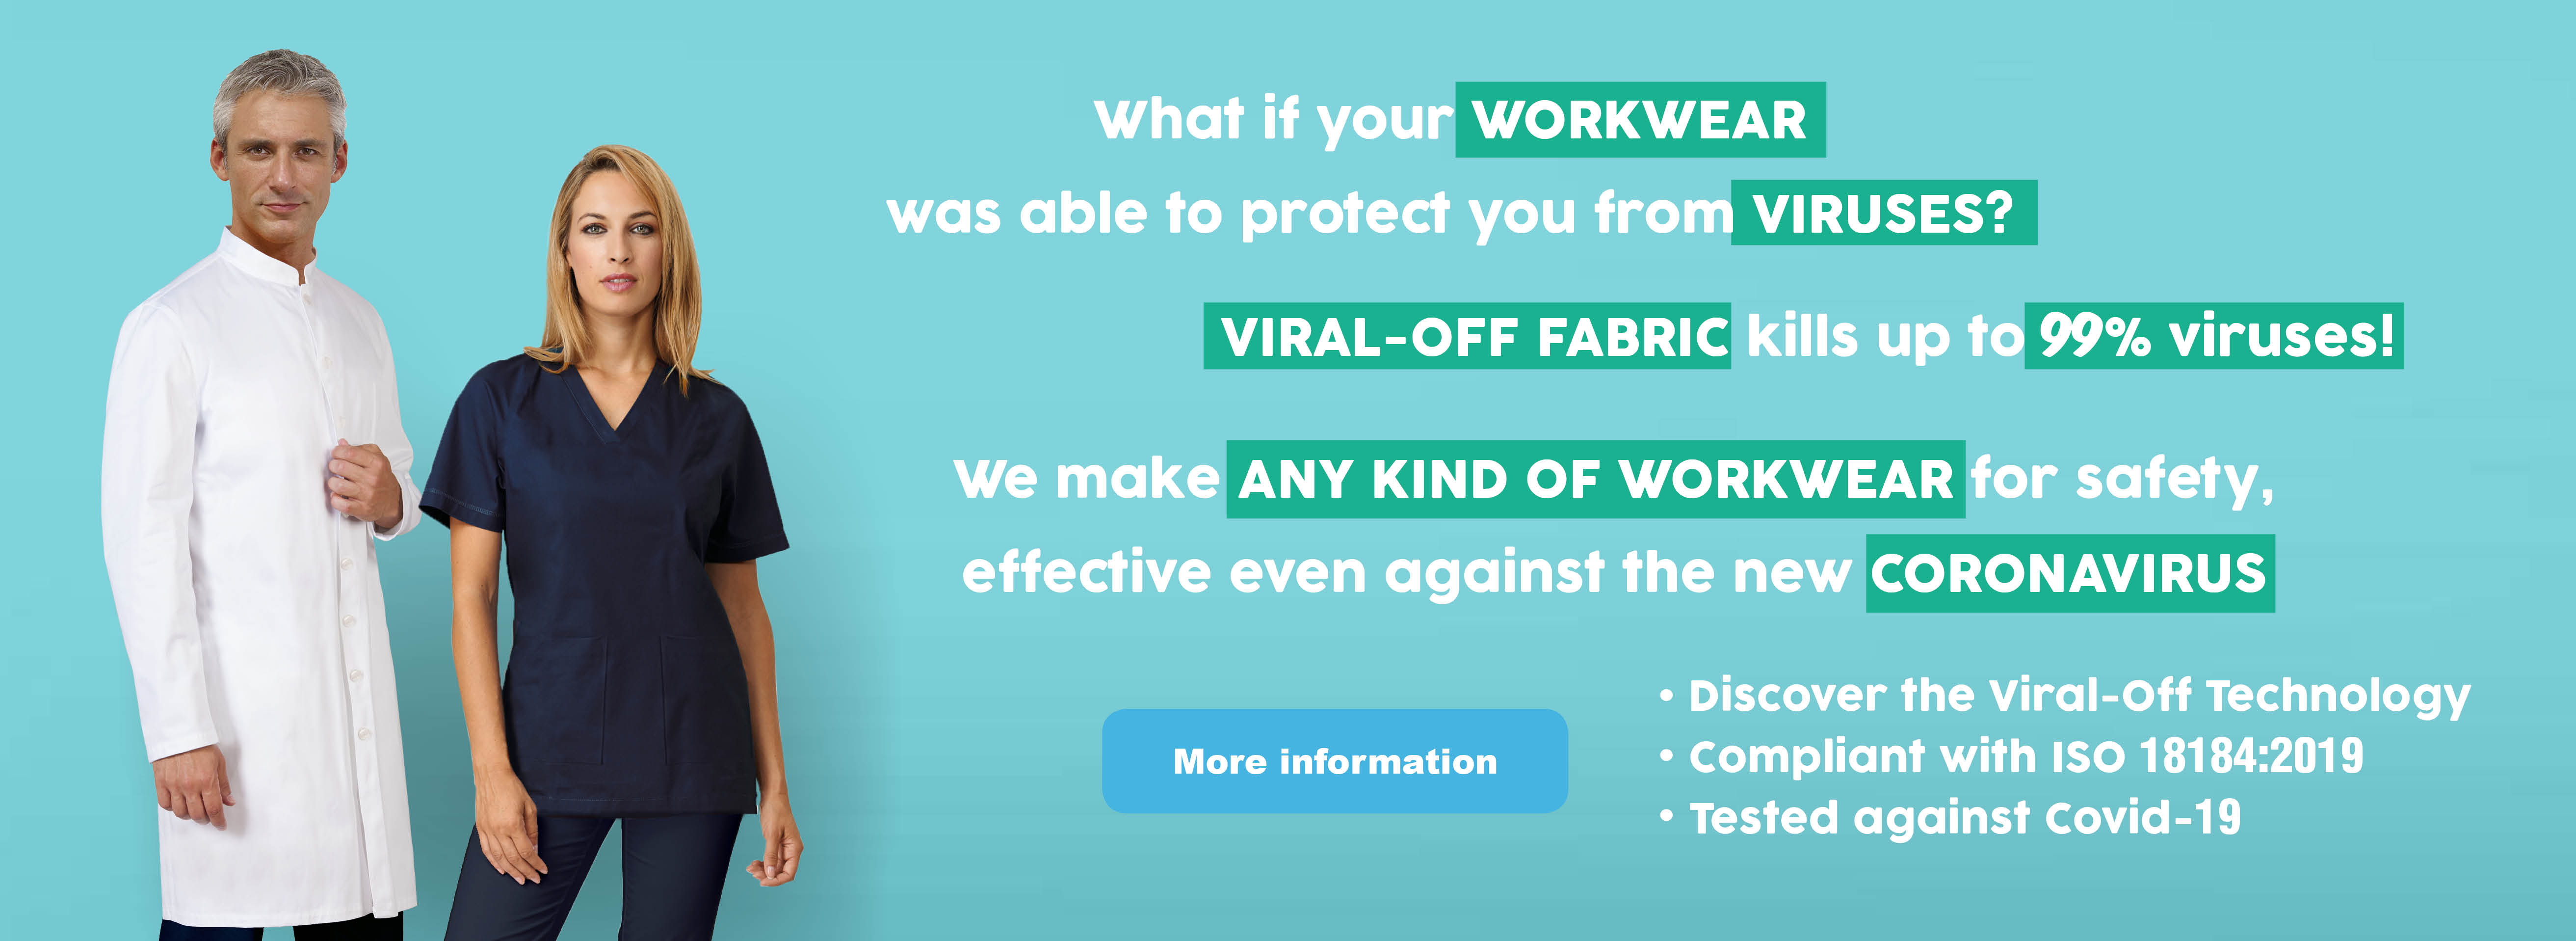 Antiviral fabric workwear